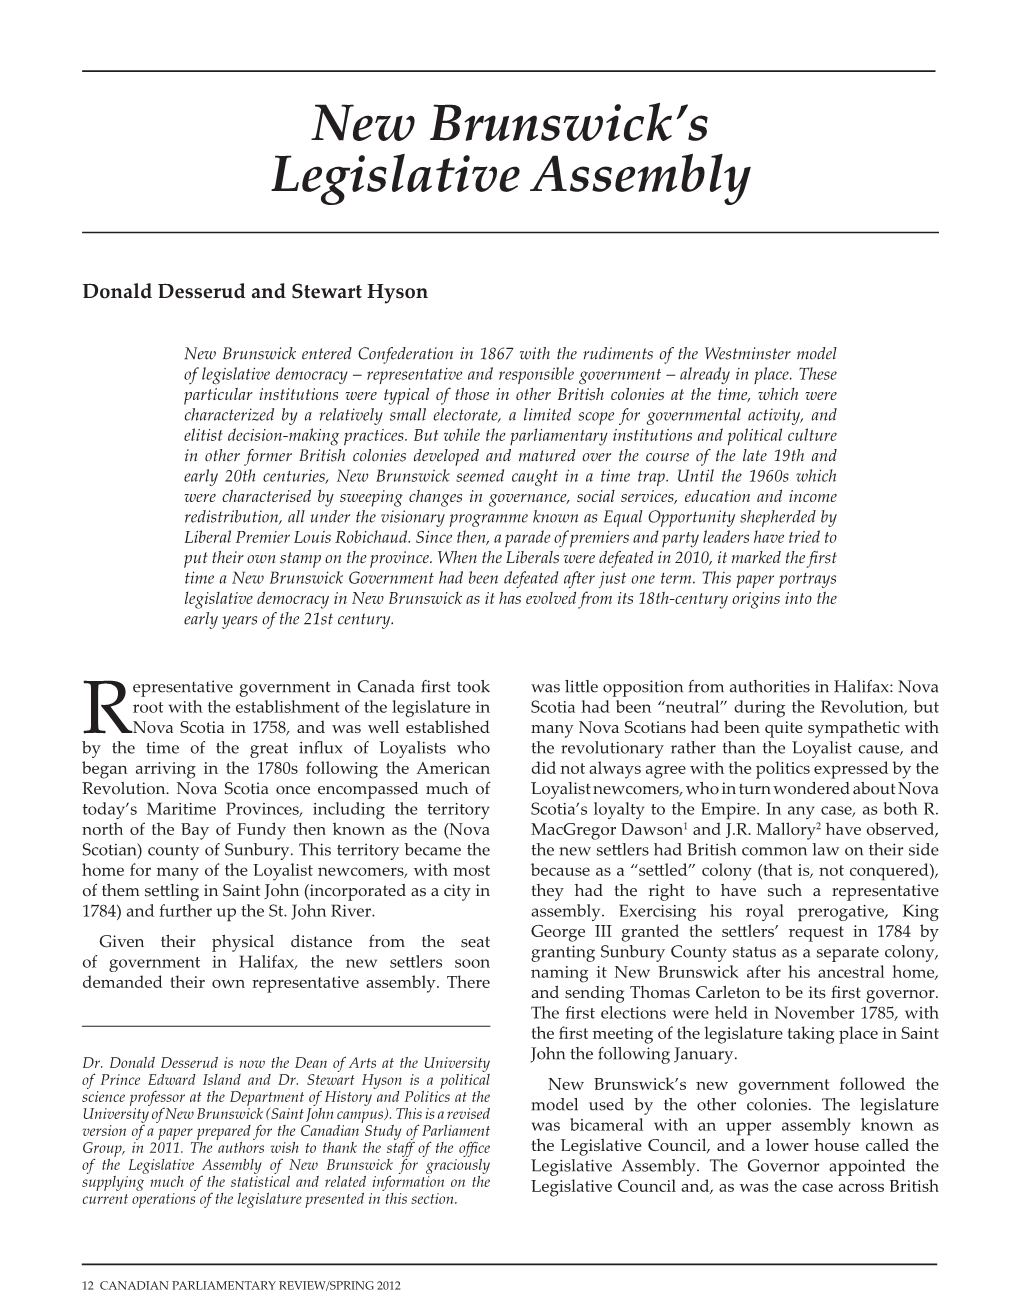 New Brunswick's Legislative Assembly